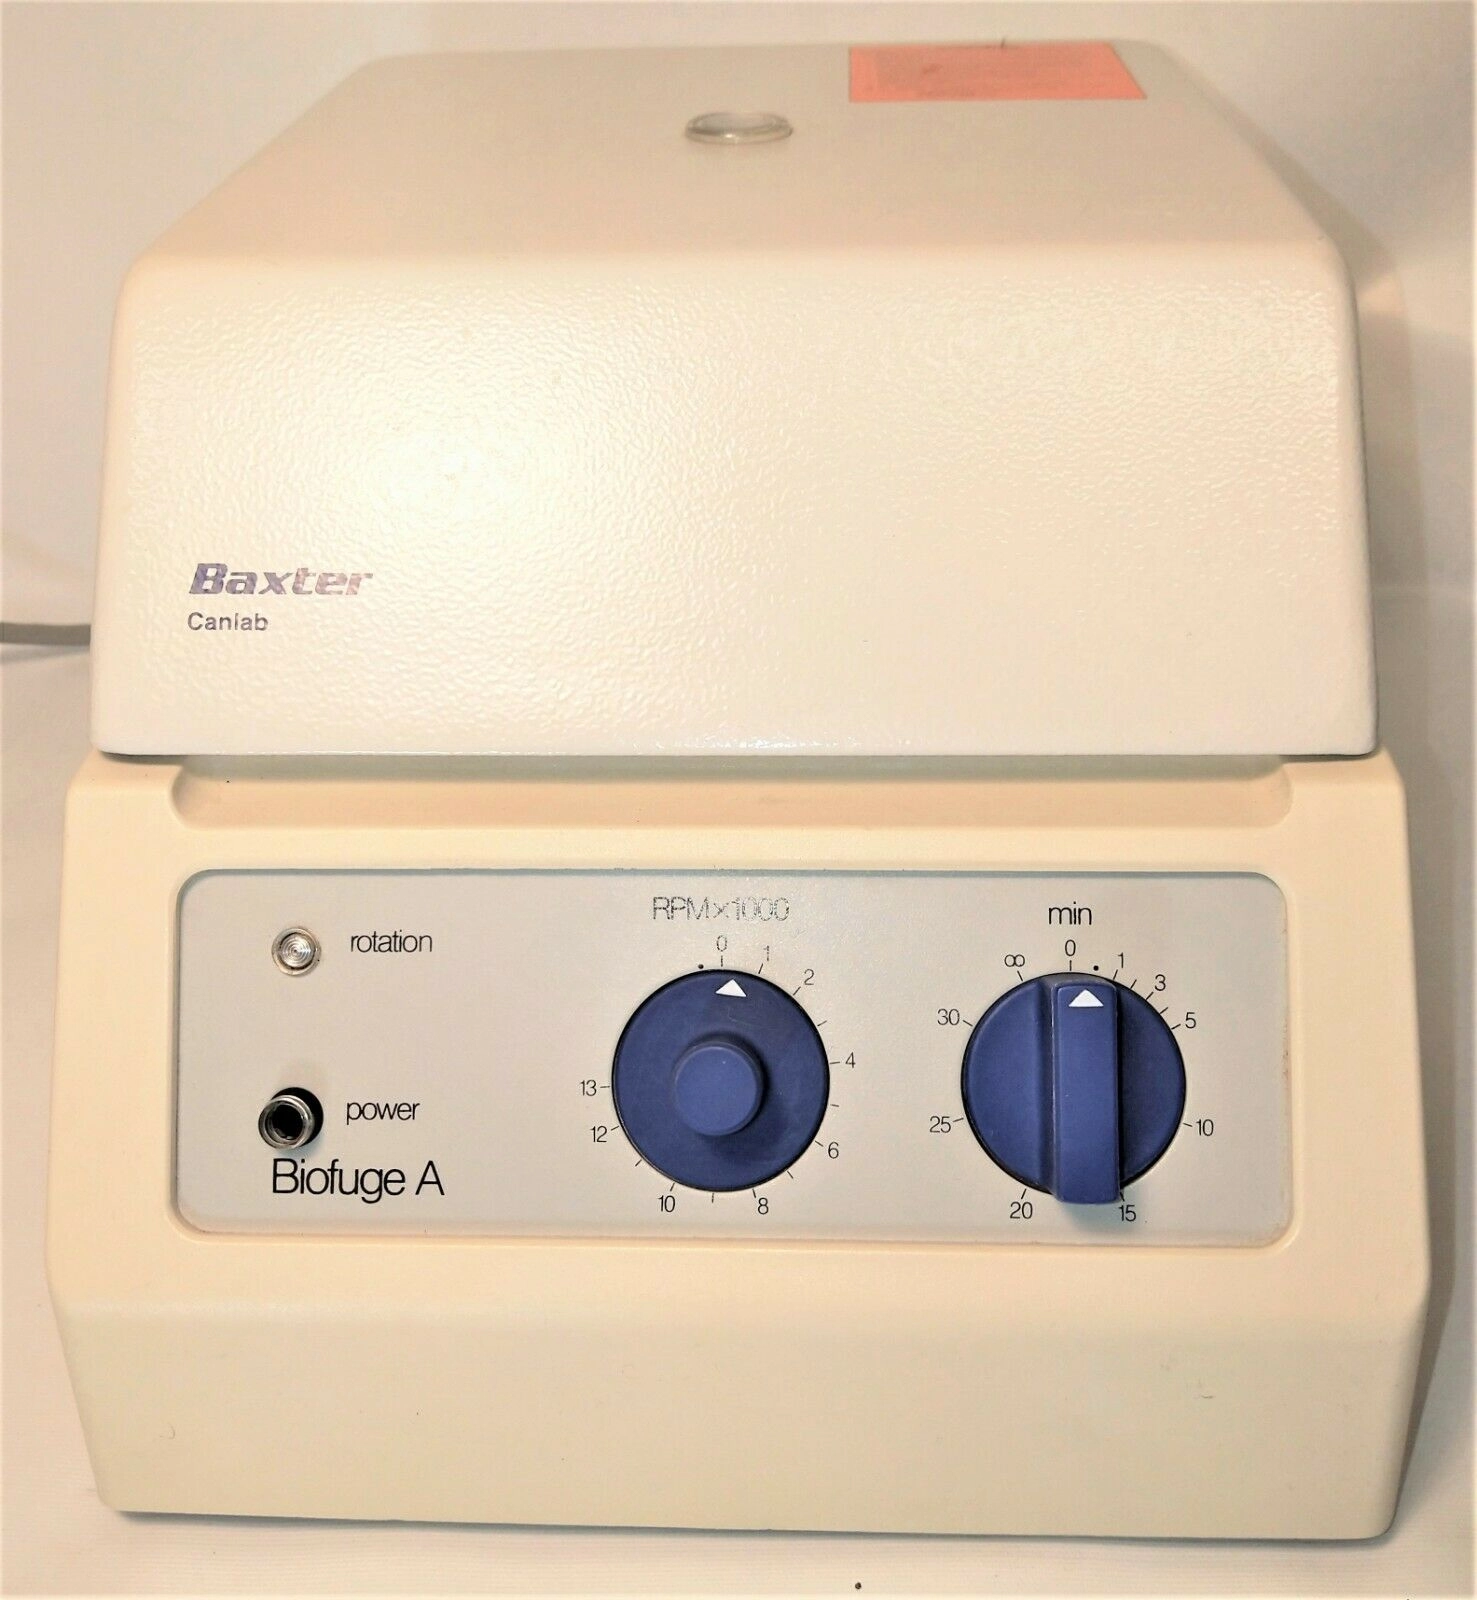 Heraeus (Baxter - Canlab) Biofuge A 1302 Microcentrifuge - 24 x 1.5mL